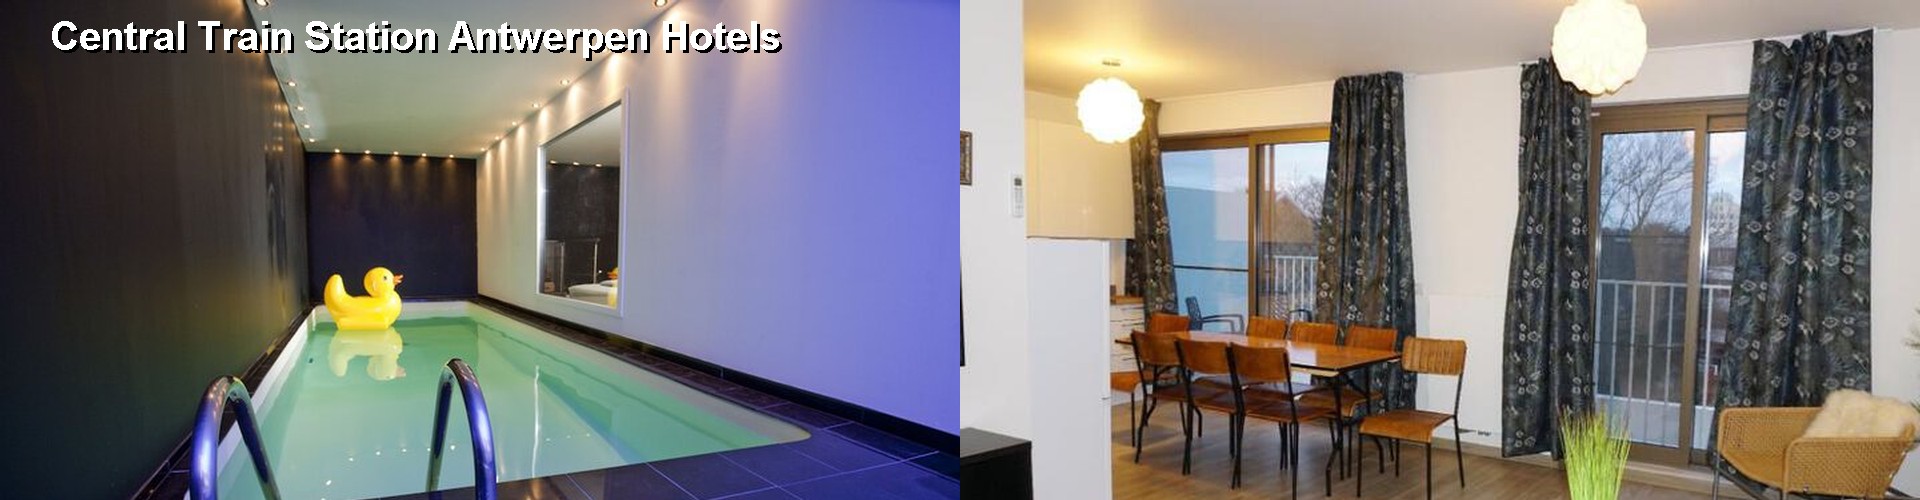 5 Best Hotels near Central Train Station Antwerpen